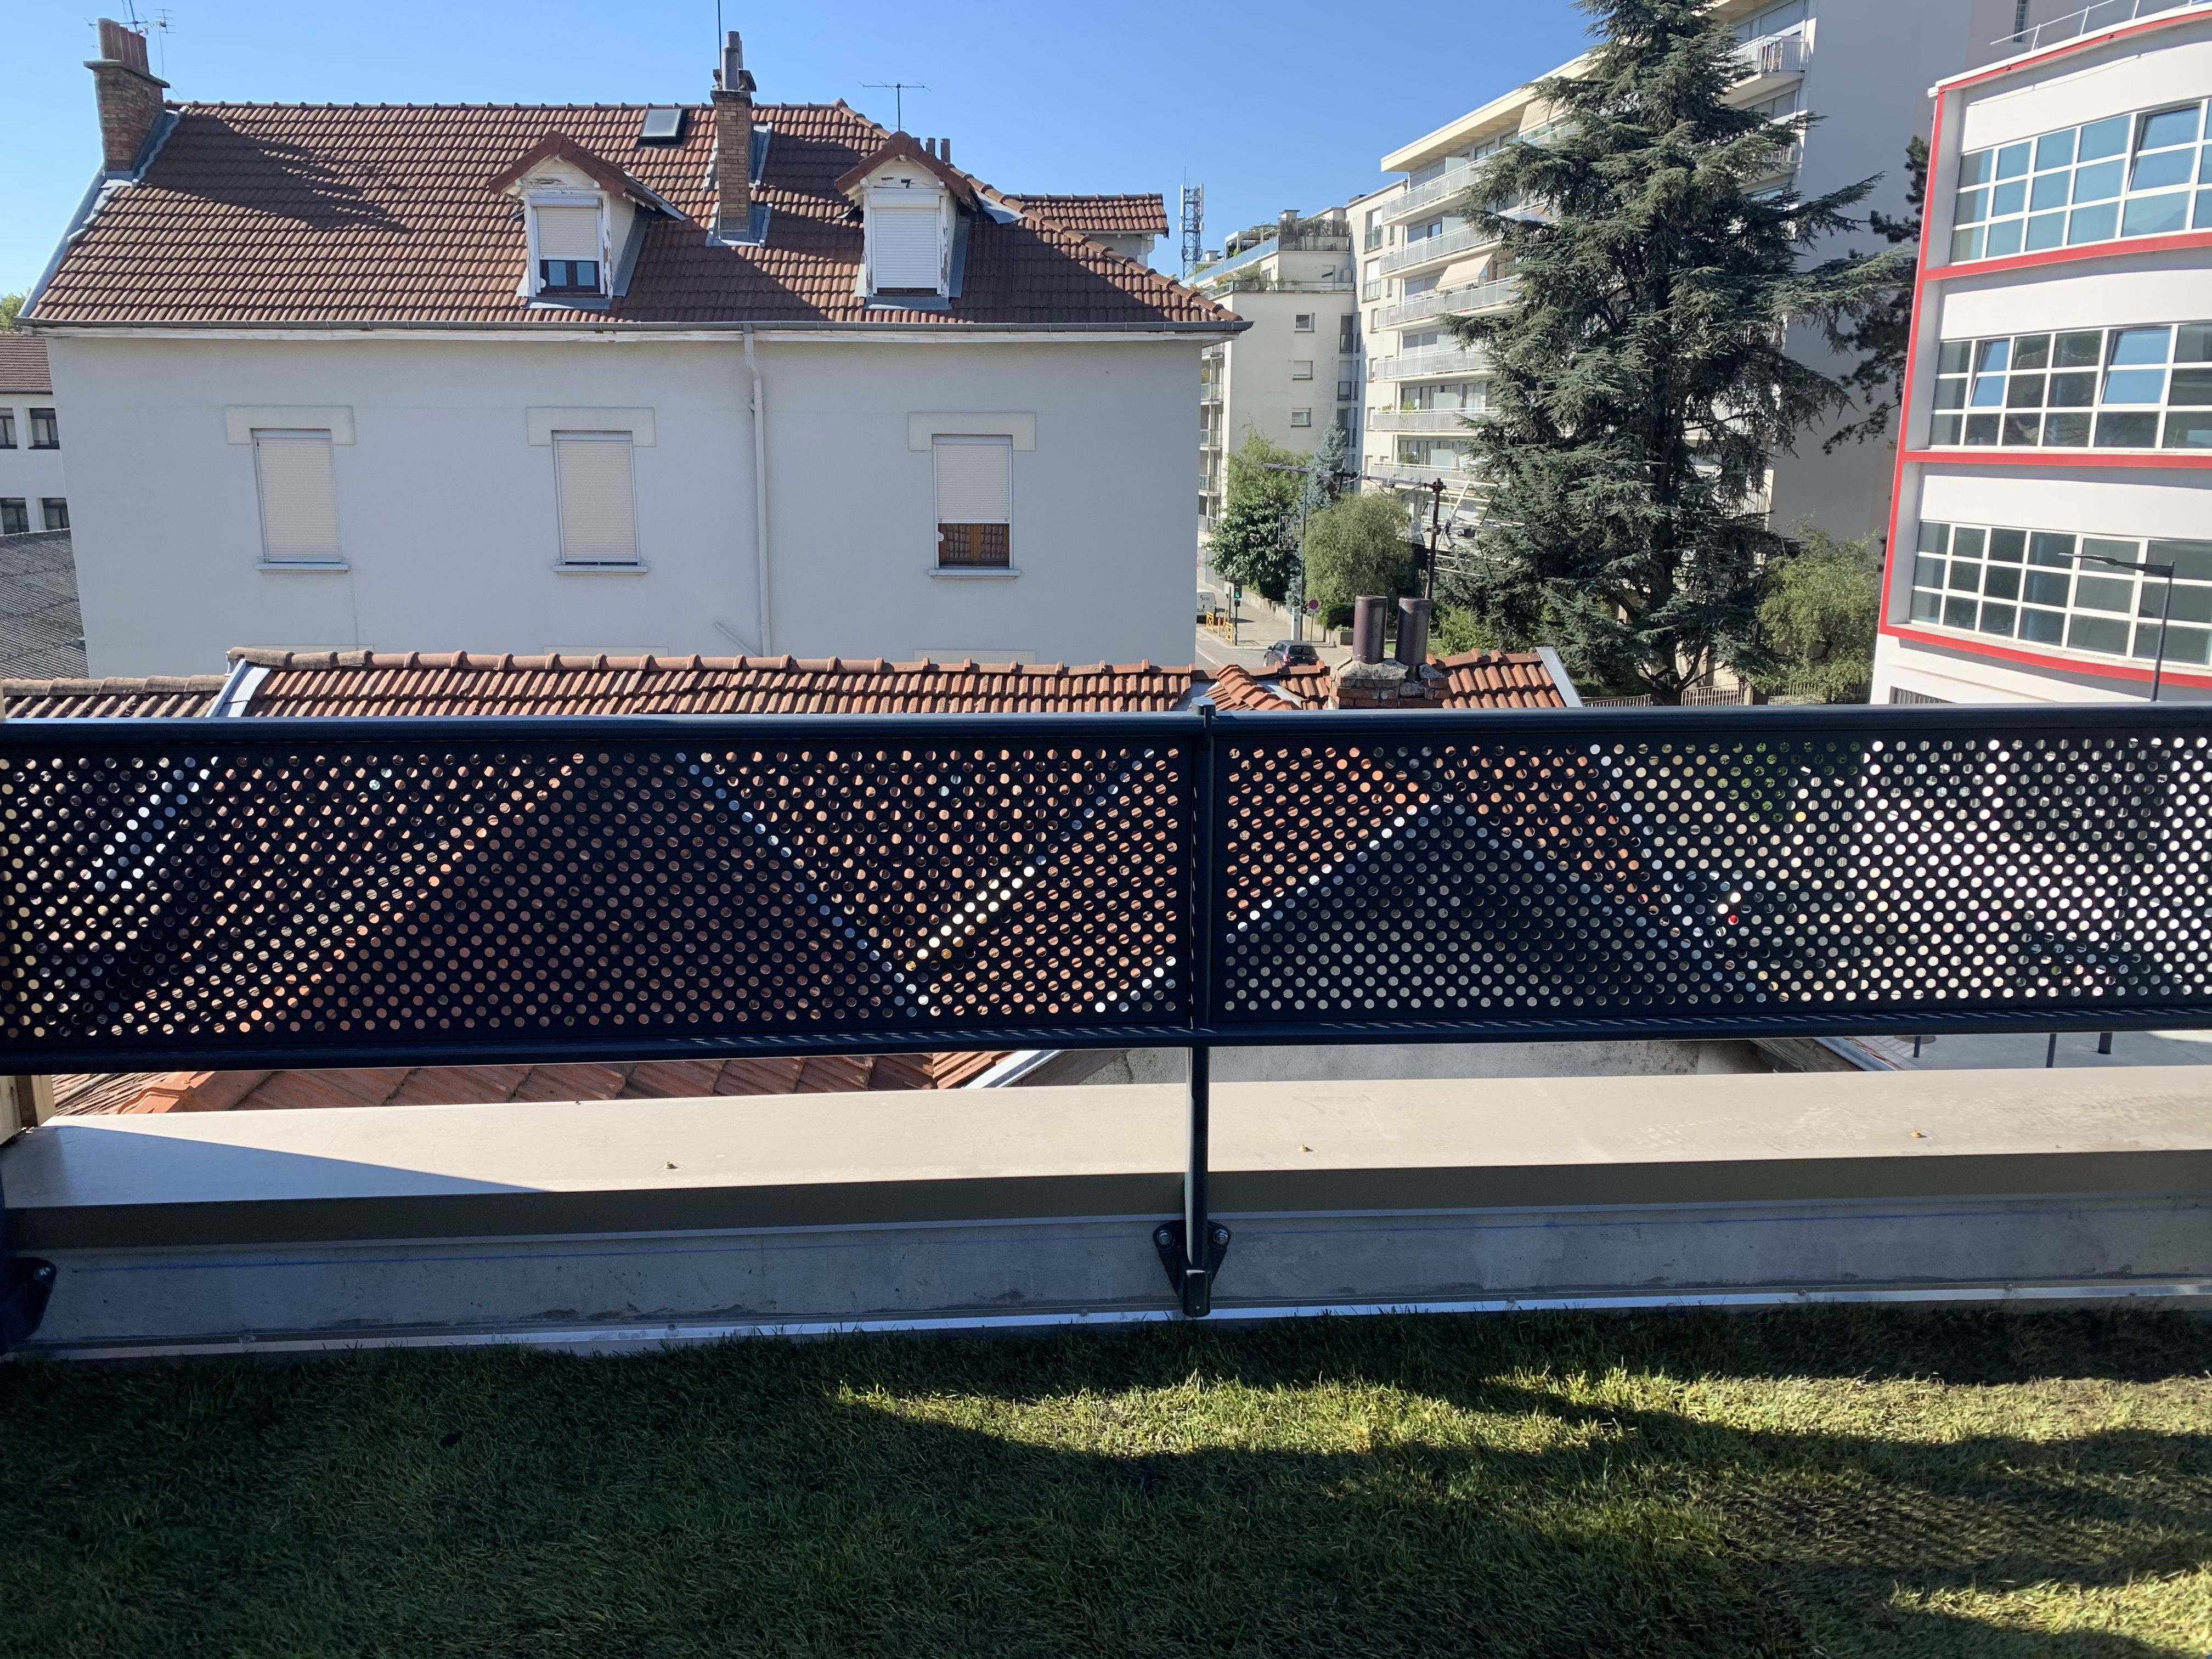 dispositif sécurité toiture terrasse